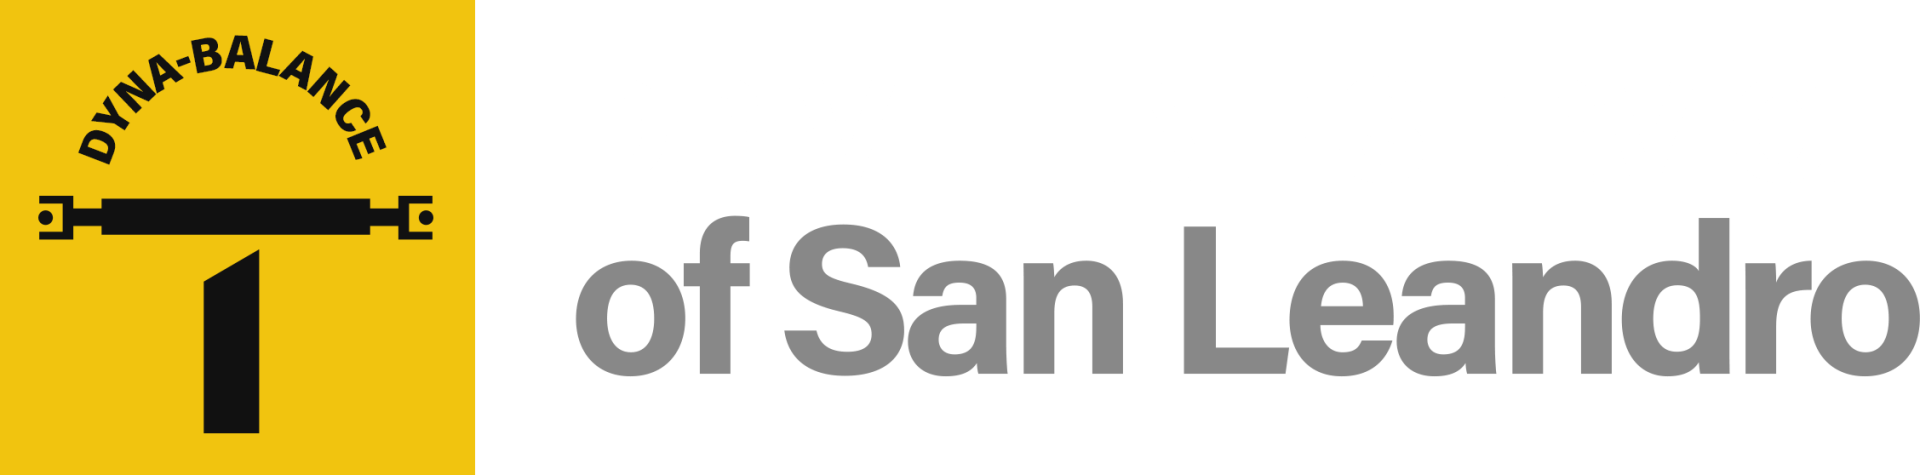 Drive Line Service Of San Leandro